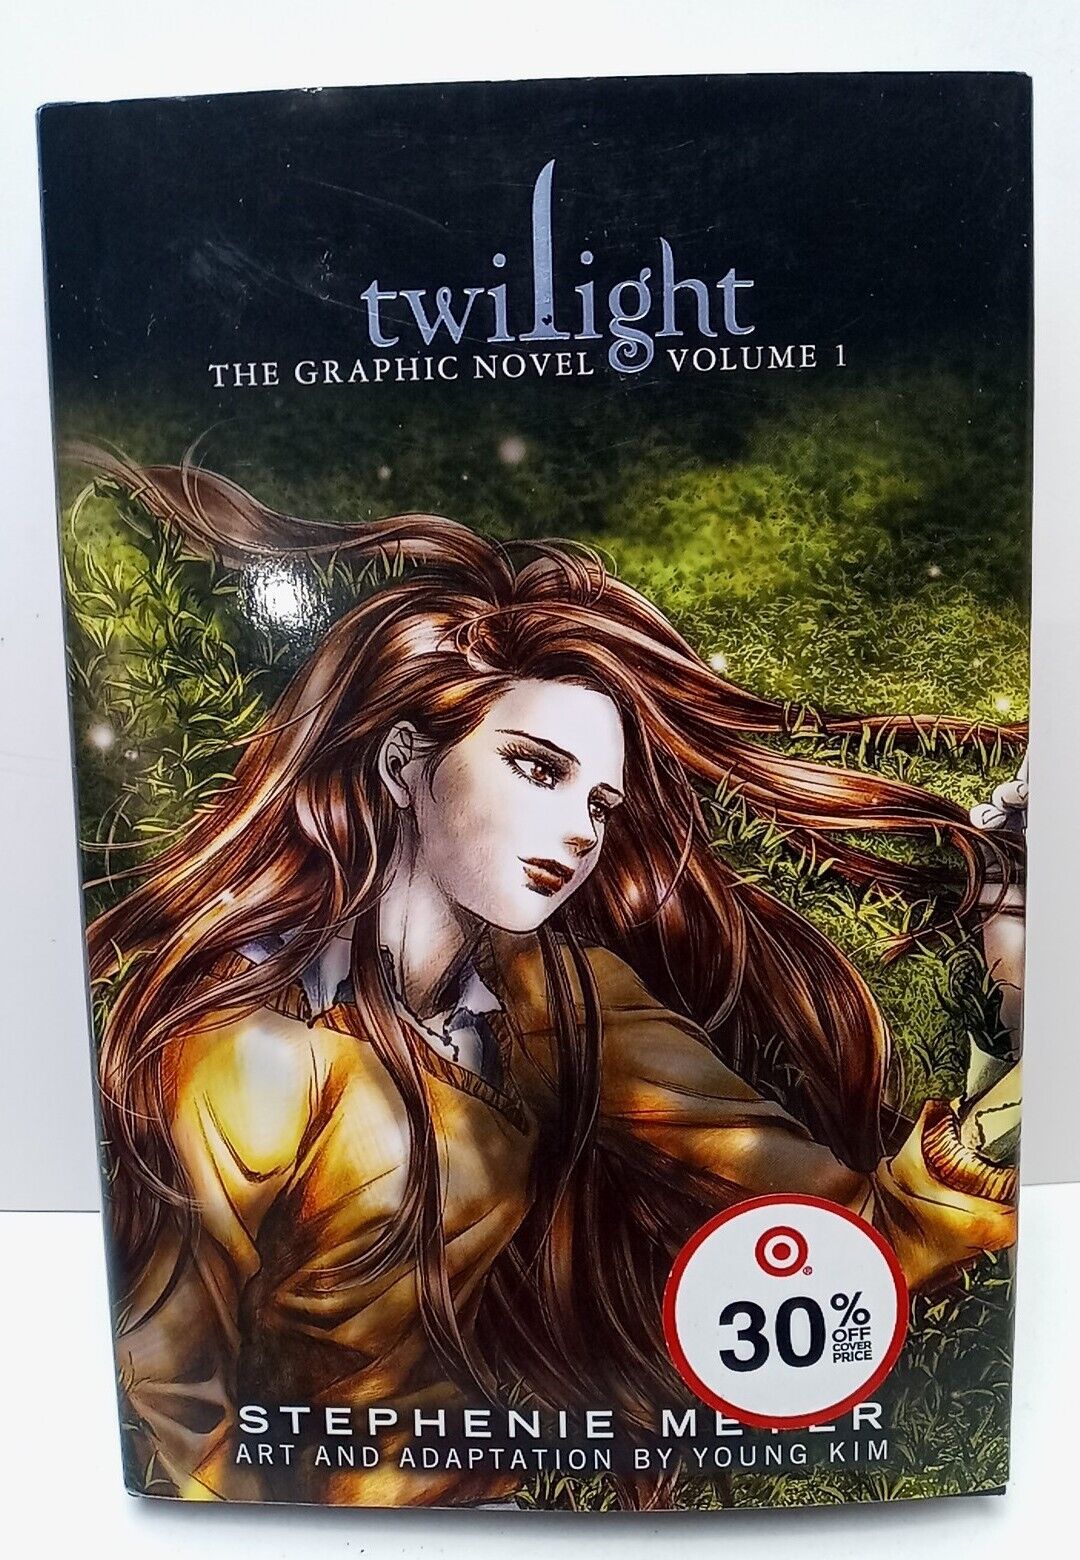 Twilight The Graphic Novel, Volume 1 First Edition 1st Print Stephanie Meyer VGC